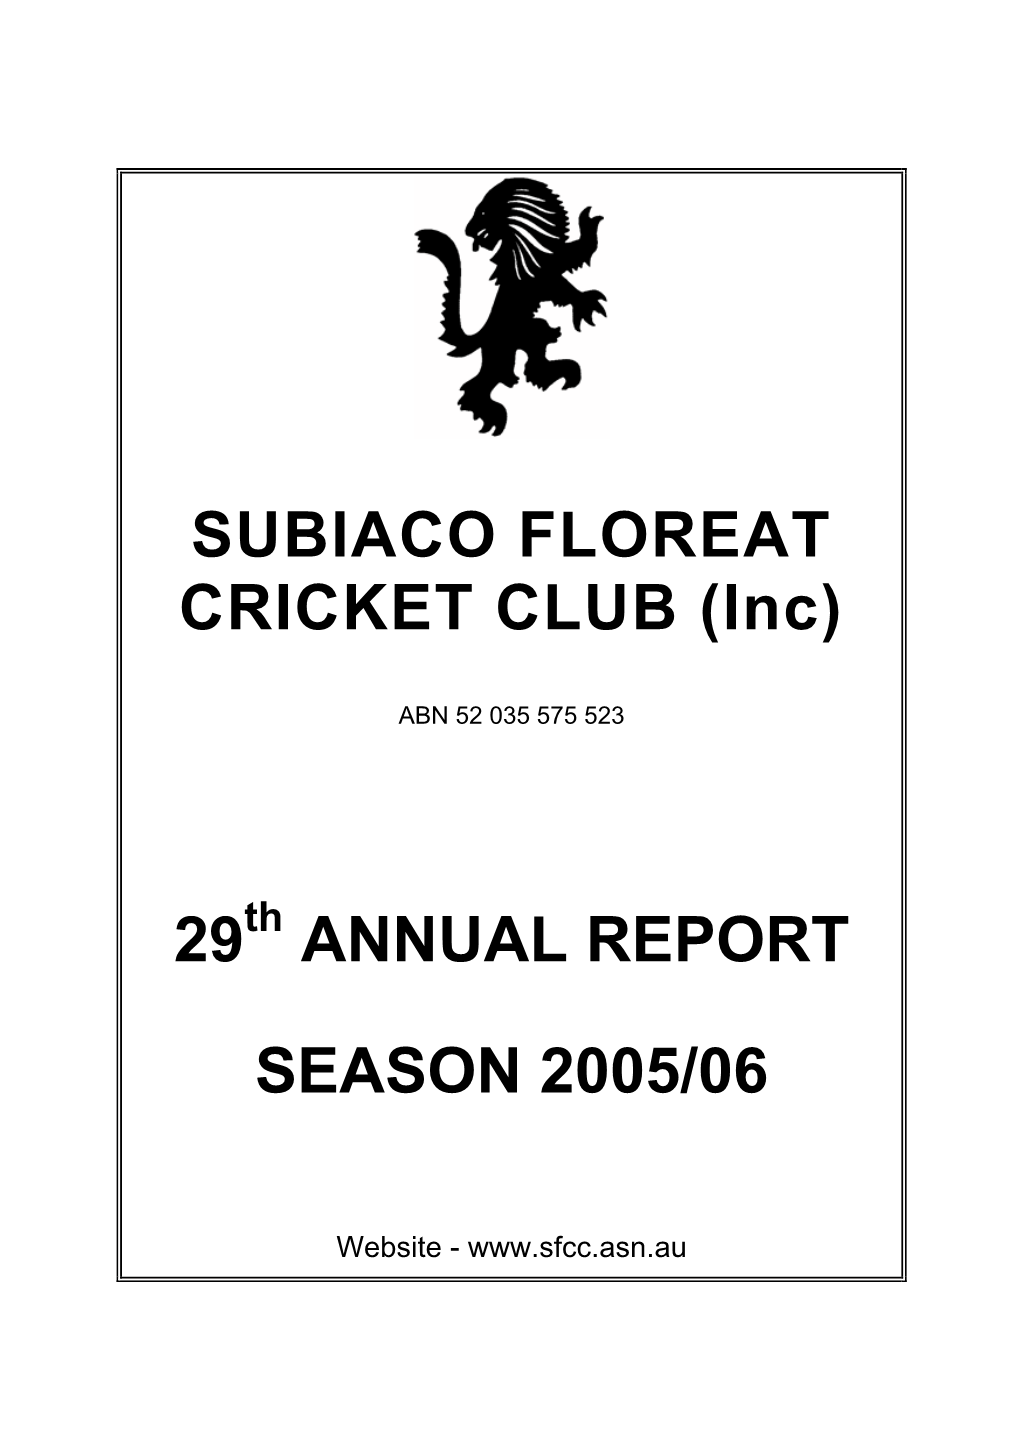 SUBIACO FLOREAT CRICKET CLUB (Inc) 29 ANNUAL REPORT